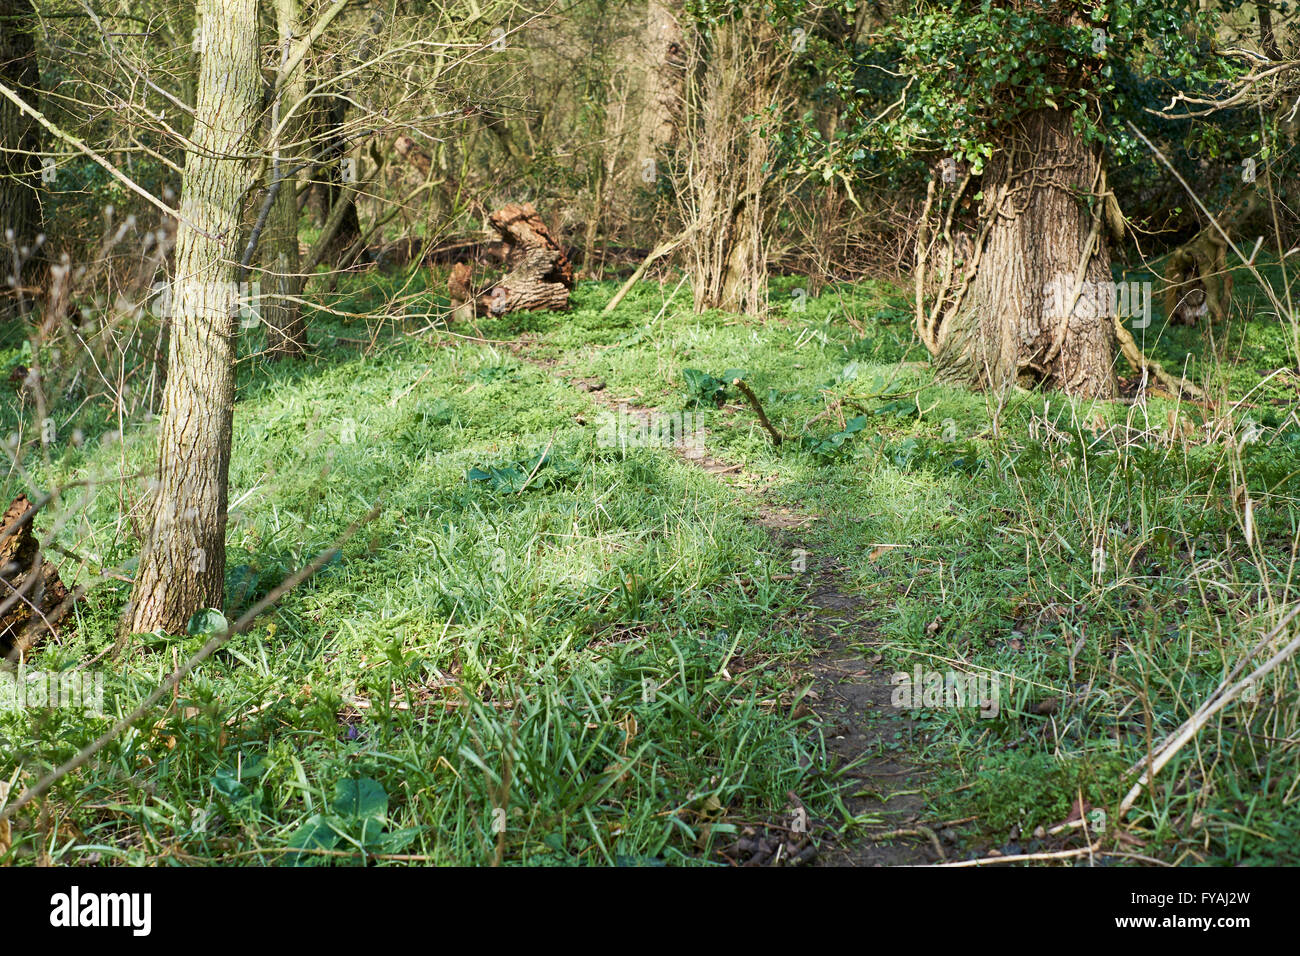 Tejón (Meles meles) camino a través del bosque. En el Reino Unido. Foto de stock